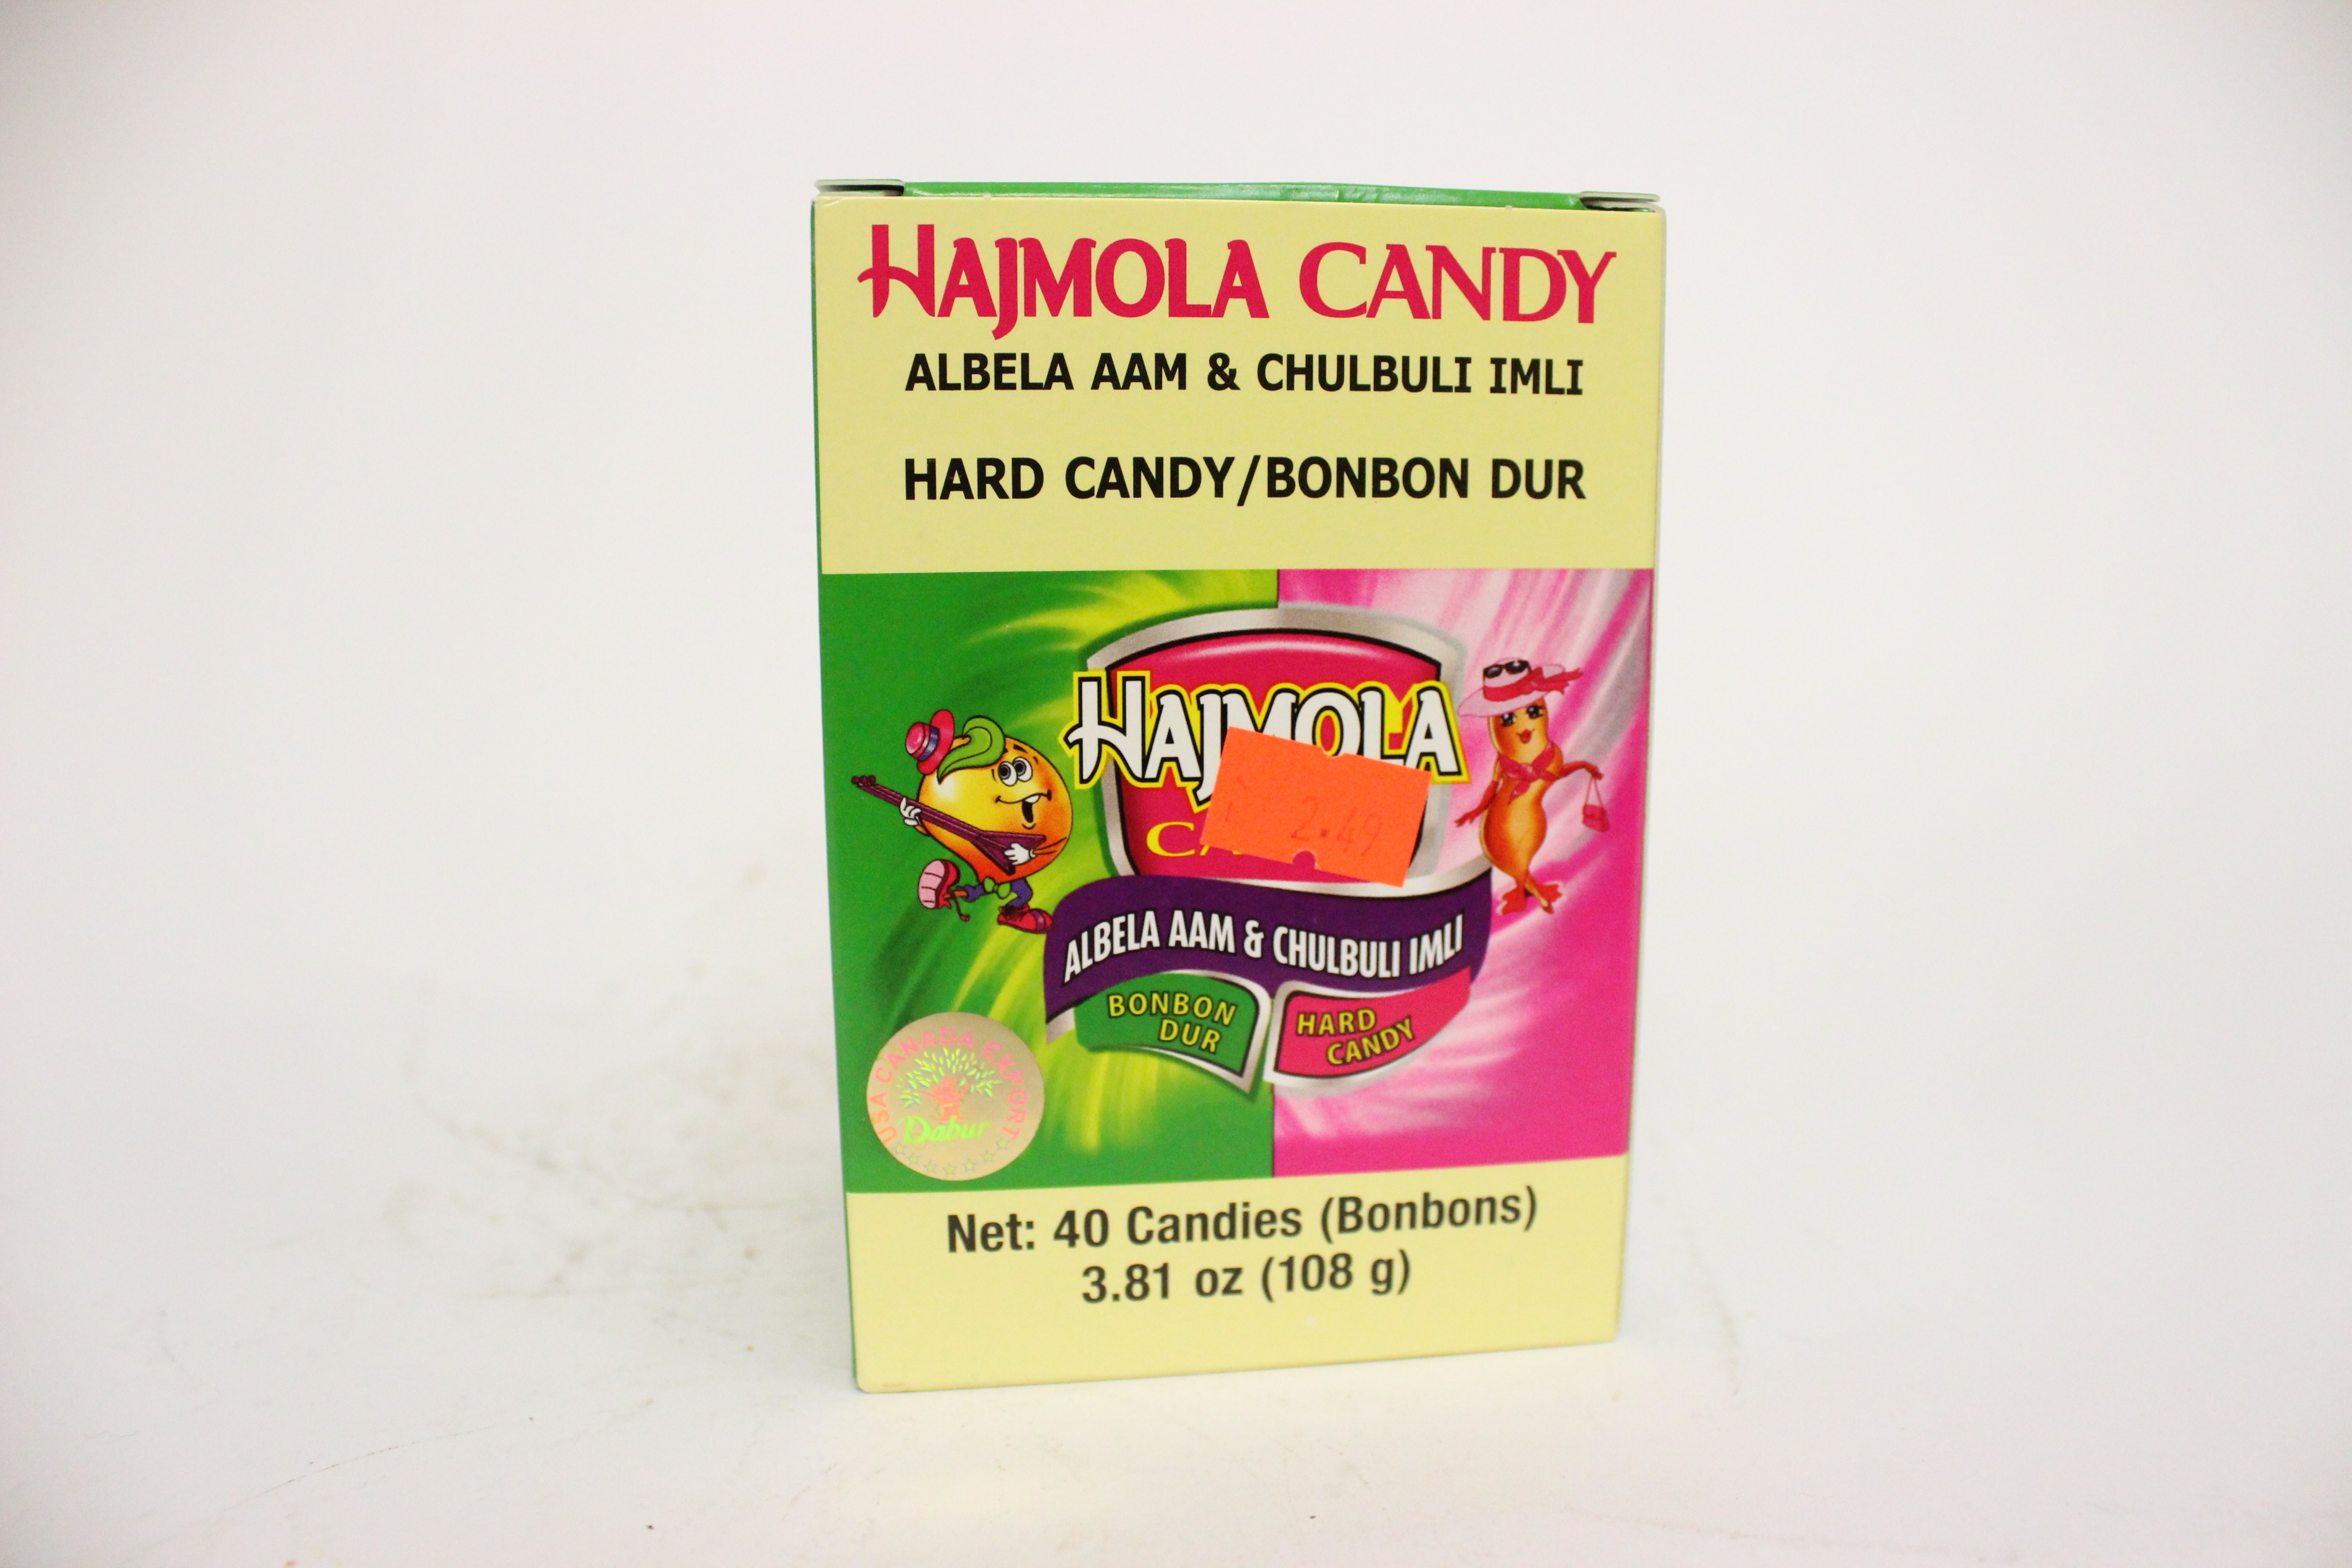 Hajmola Candy Albela Aam & Chulbuli Imli 3.81 oz 40 Candies